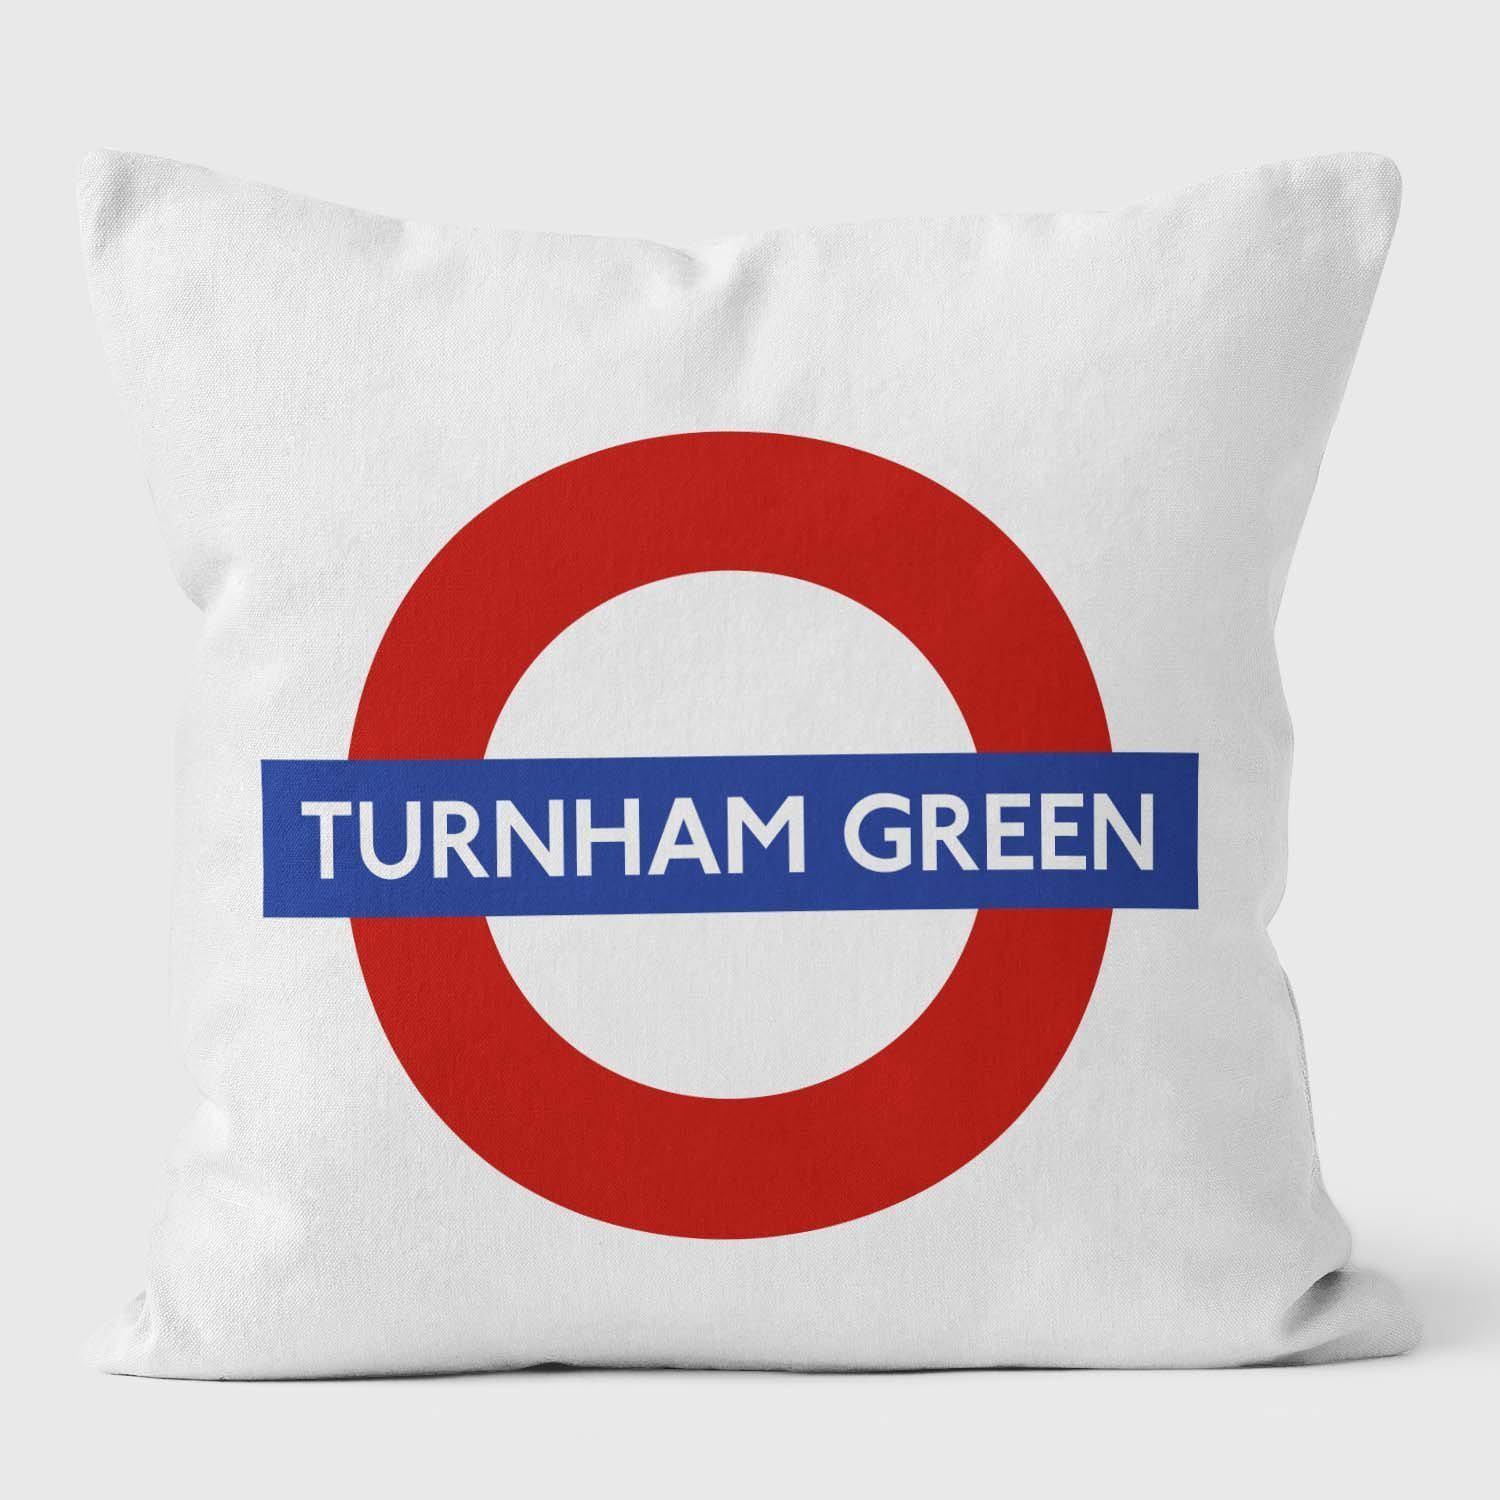 Turnham Green London Underground Tube Station Roundel Cushion - Handmade Cushions UK - WeLoveCushions